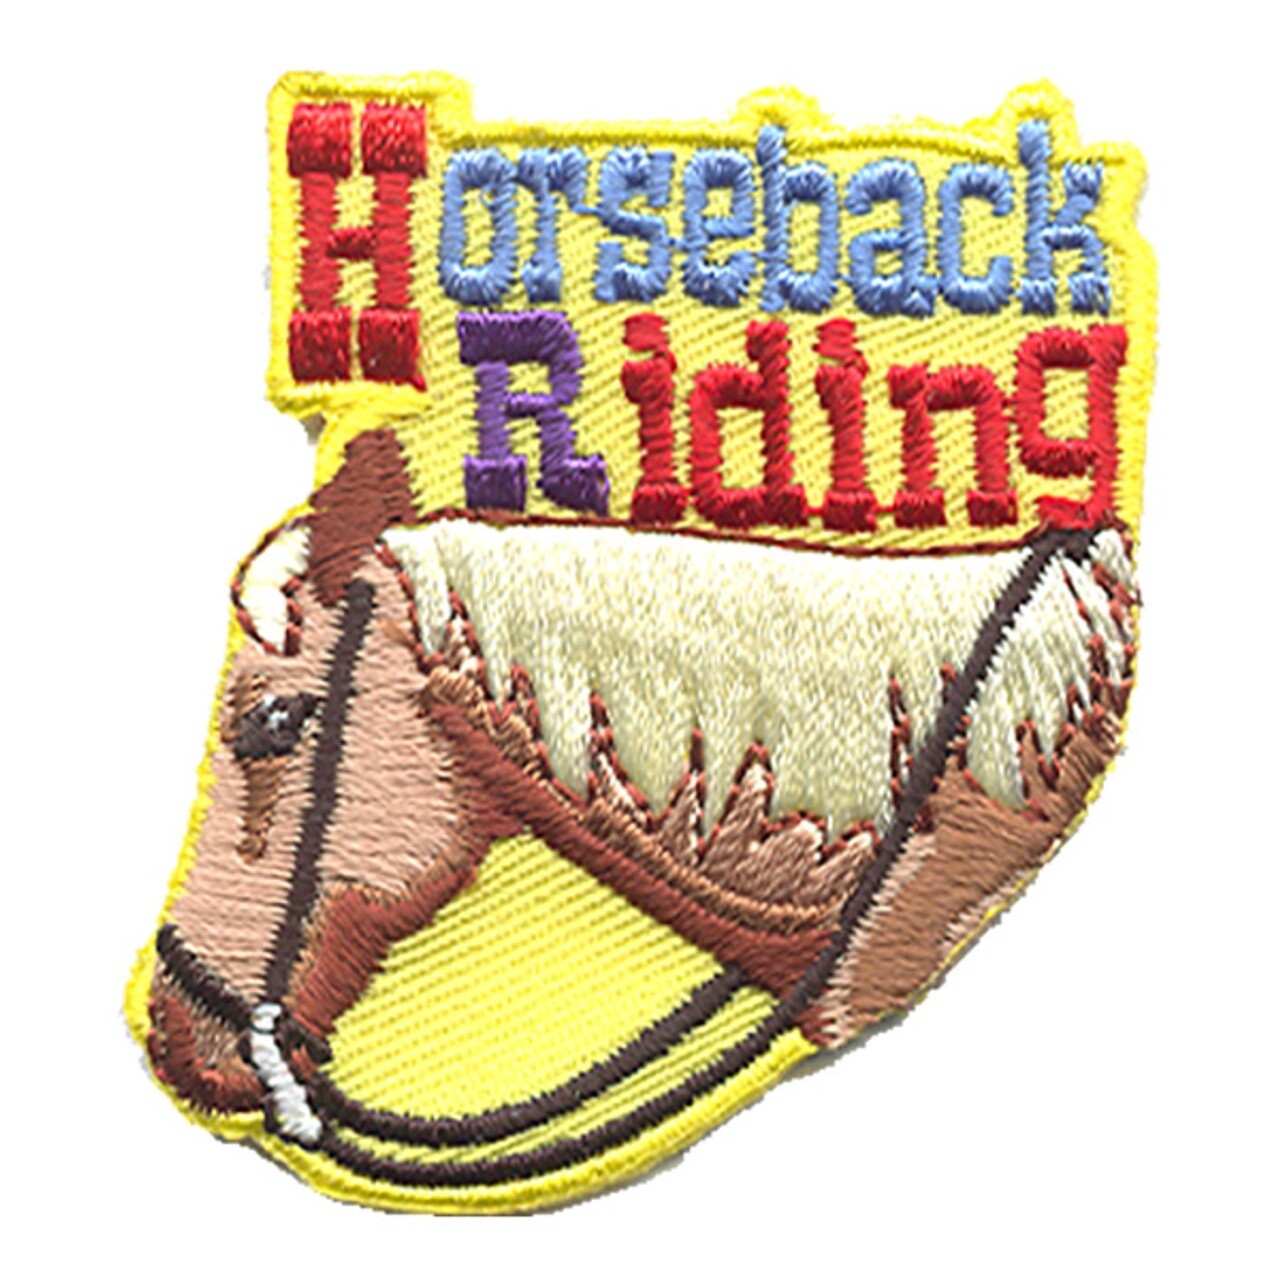 Horseback Riding Patch